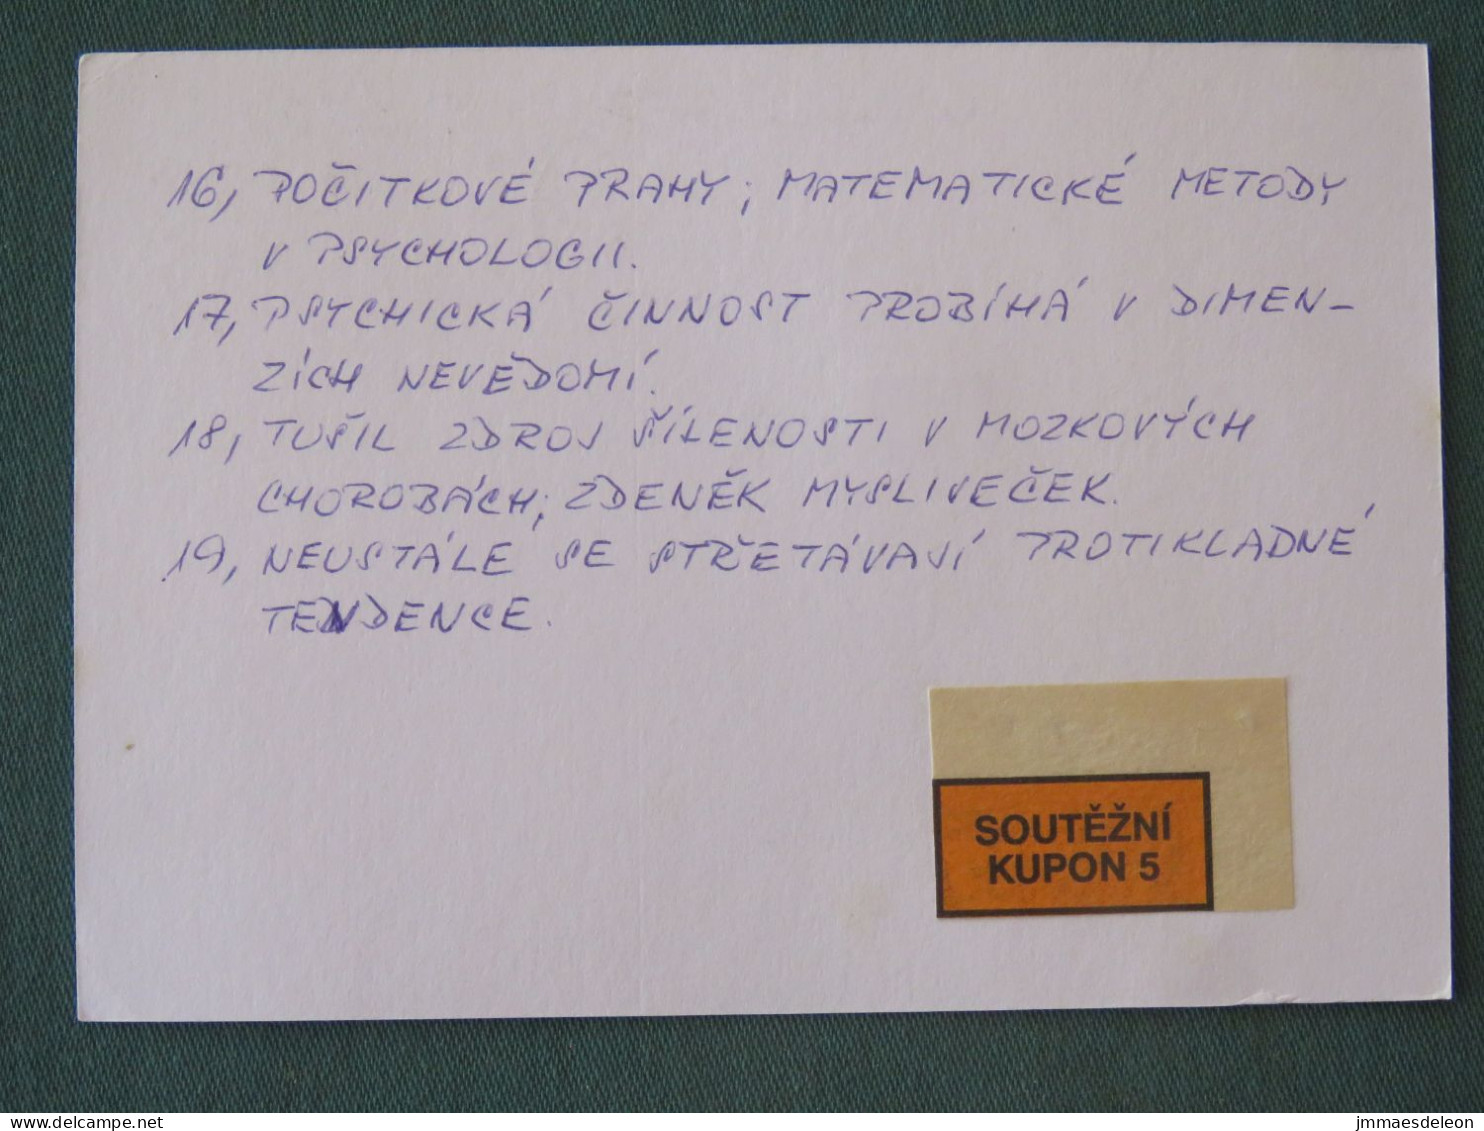 Czech Republic 2001 Stationery Postcard 5.40 Kcs Prague Sent Locally From Ostrava, EMS Slogan - Lettres & Documents